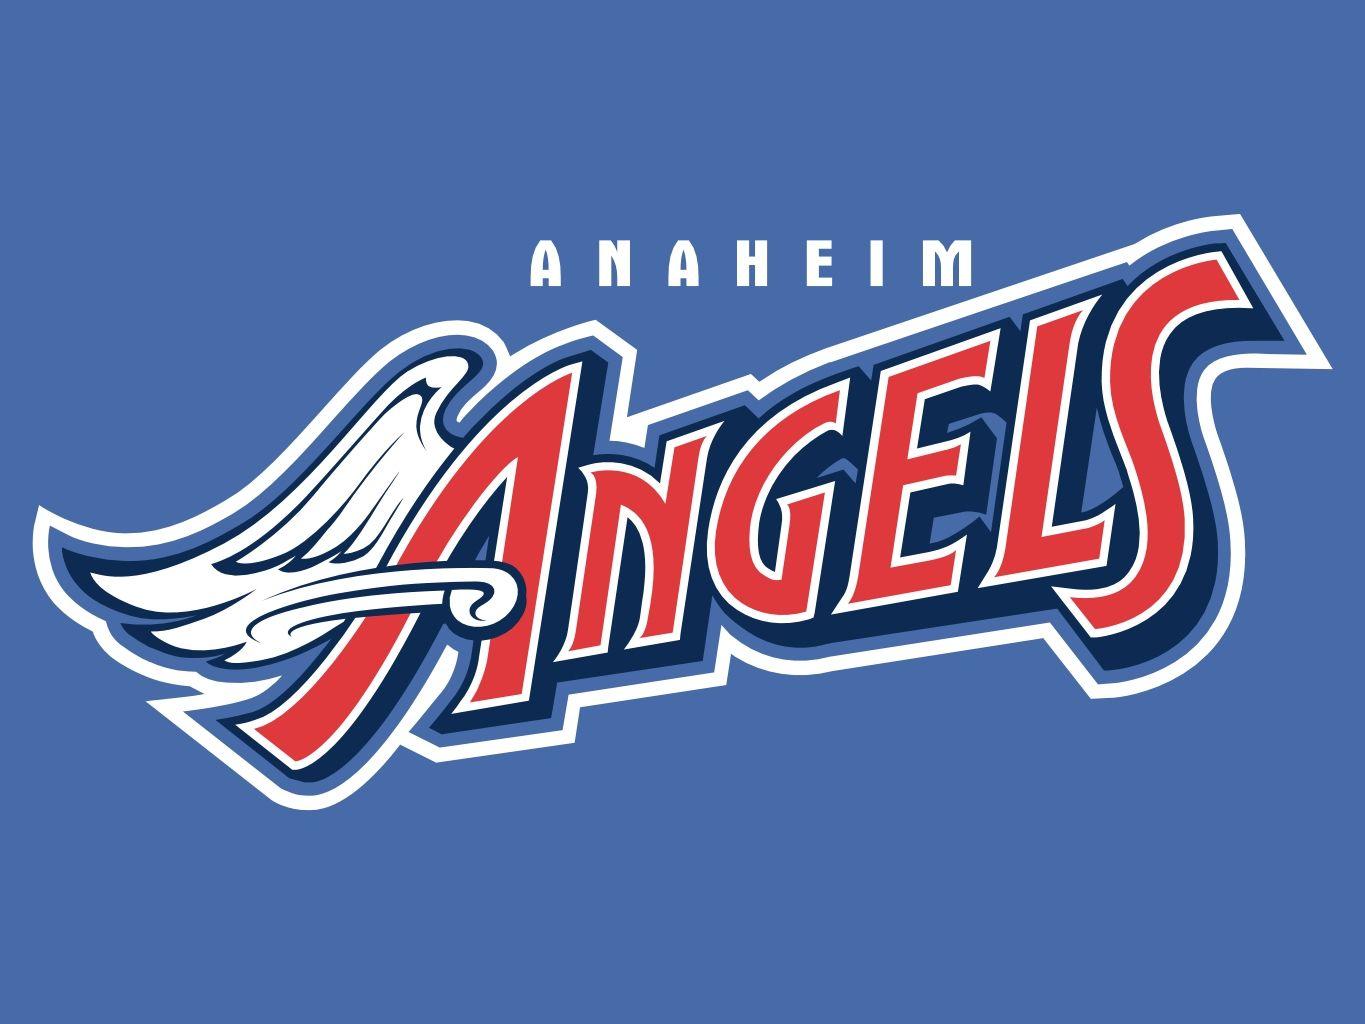 Los Angeles Angels of Anaheim wallpaper 3 by hawthorne85 on DeviantArt